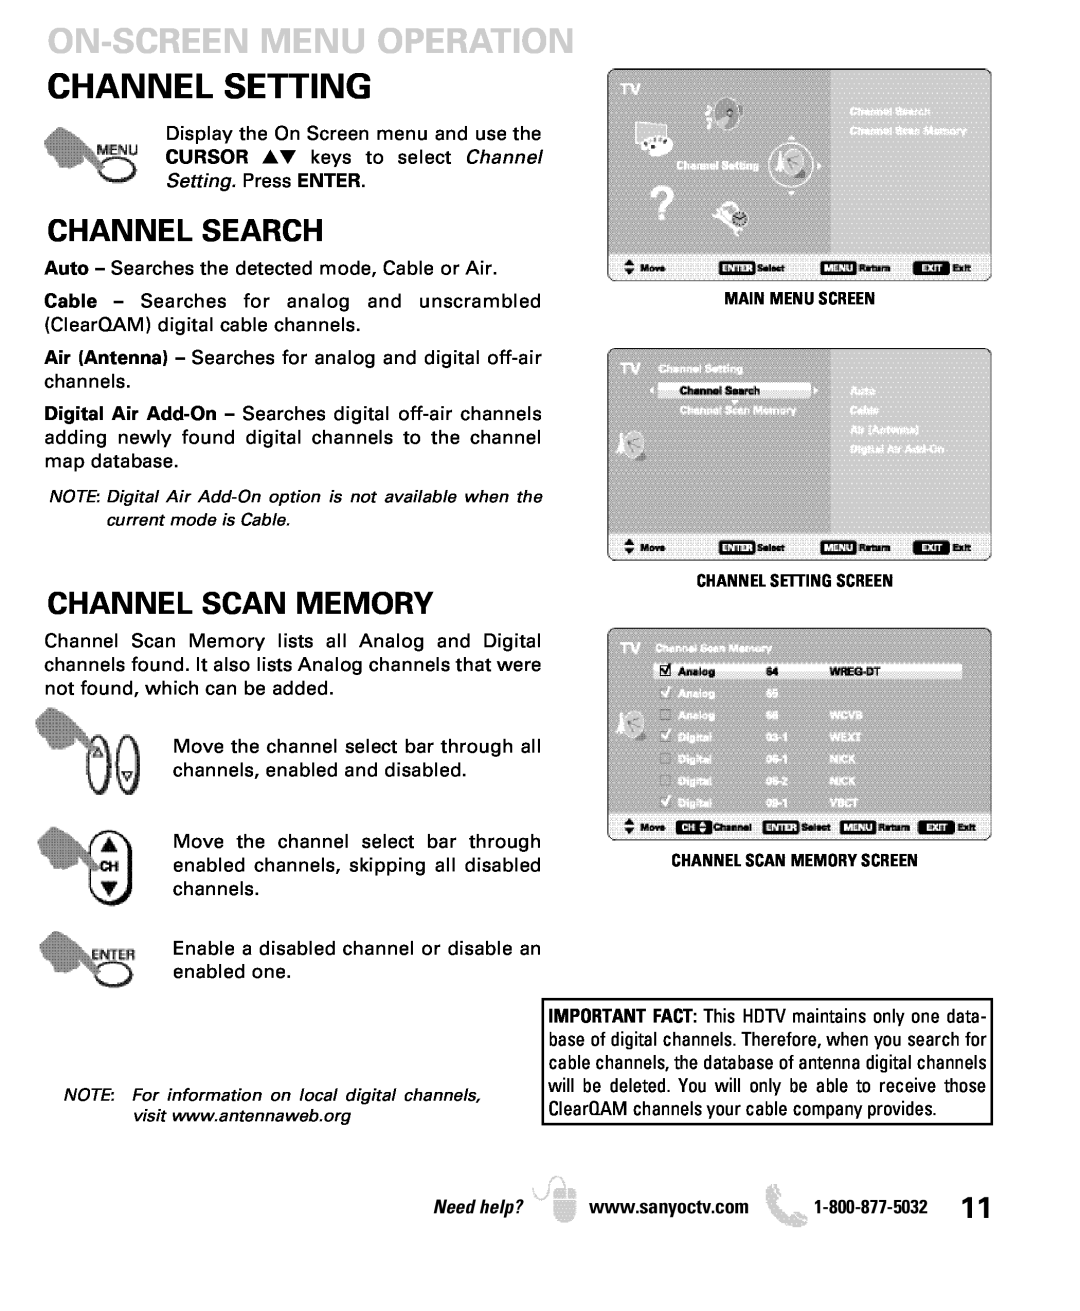 Sanyo DP19649, DP26649 On-Screen Menu Operation Channel Setting, Channel Search, Channel Scan Memory, Setting. Press ENTER 